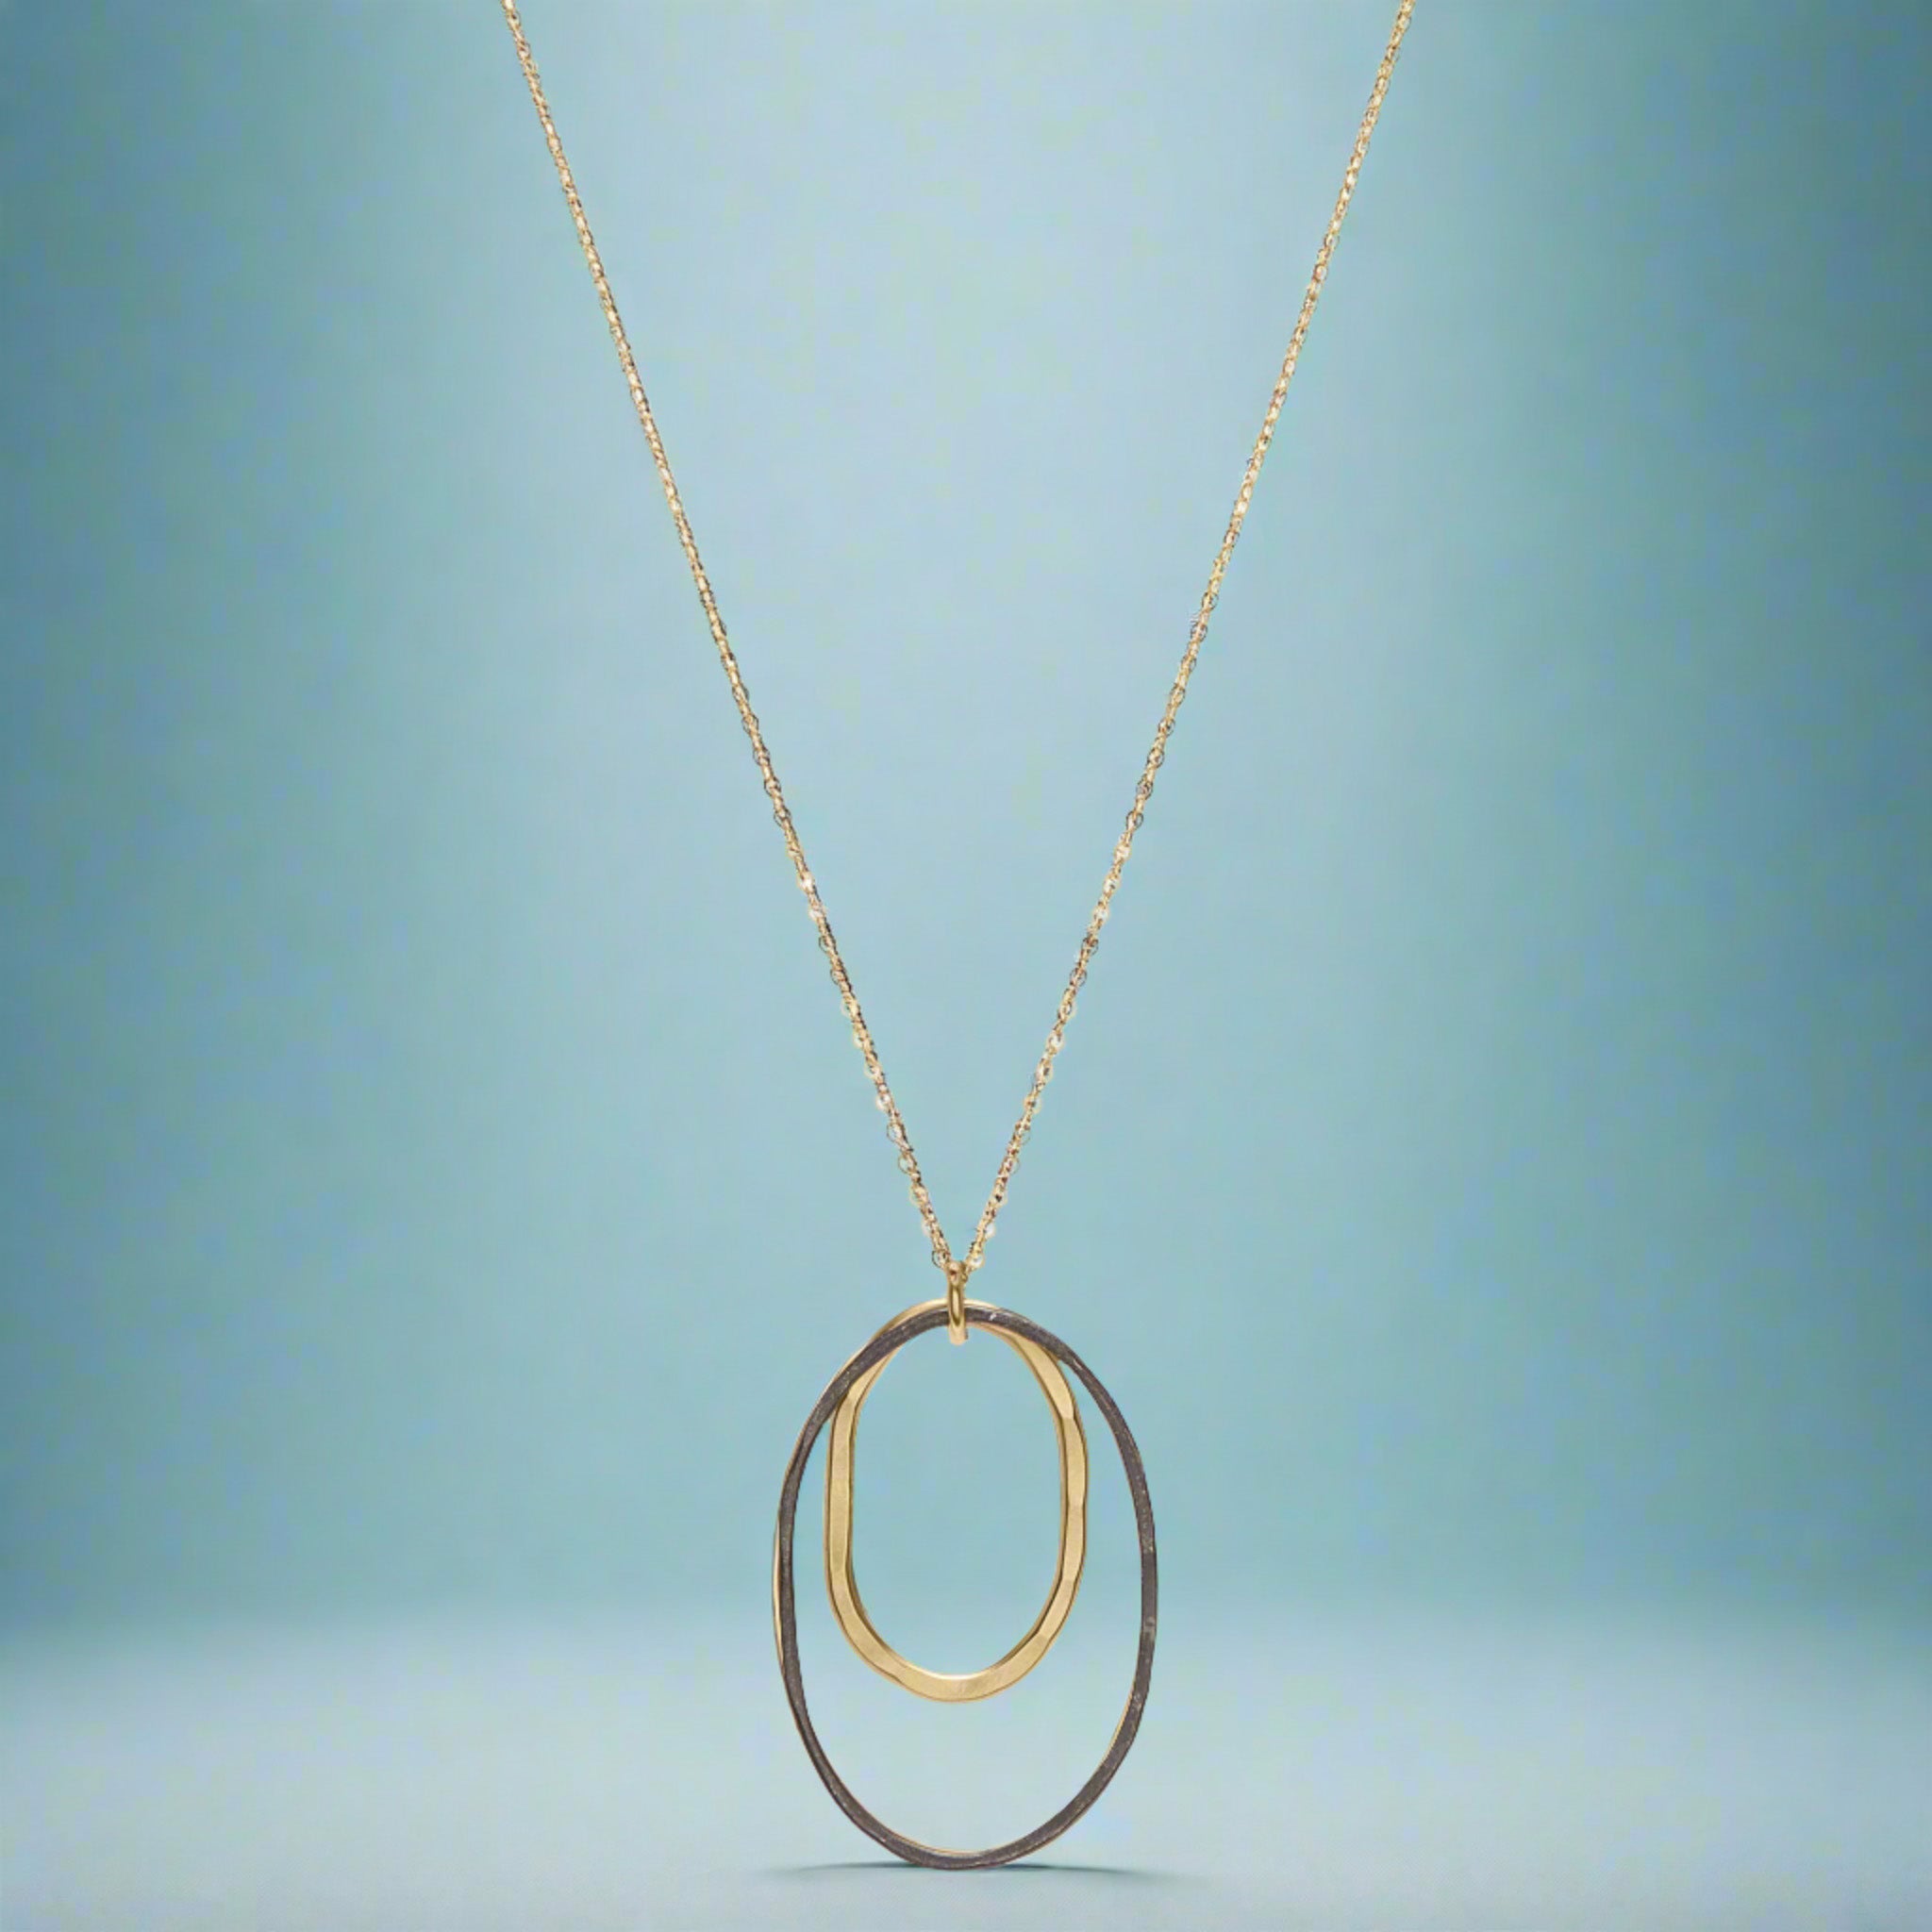 Black + Gold Oval Necklace